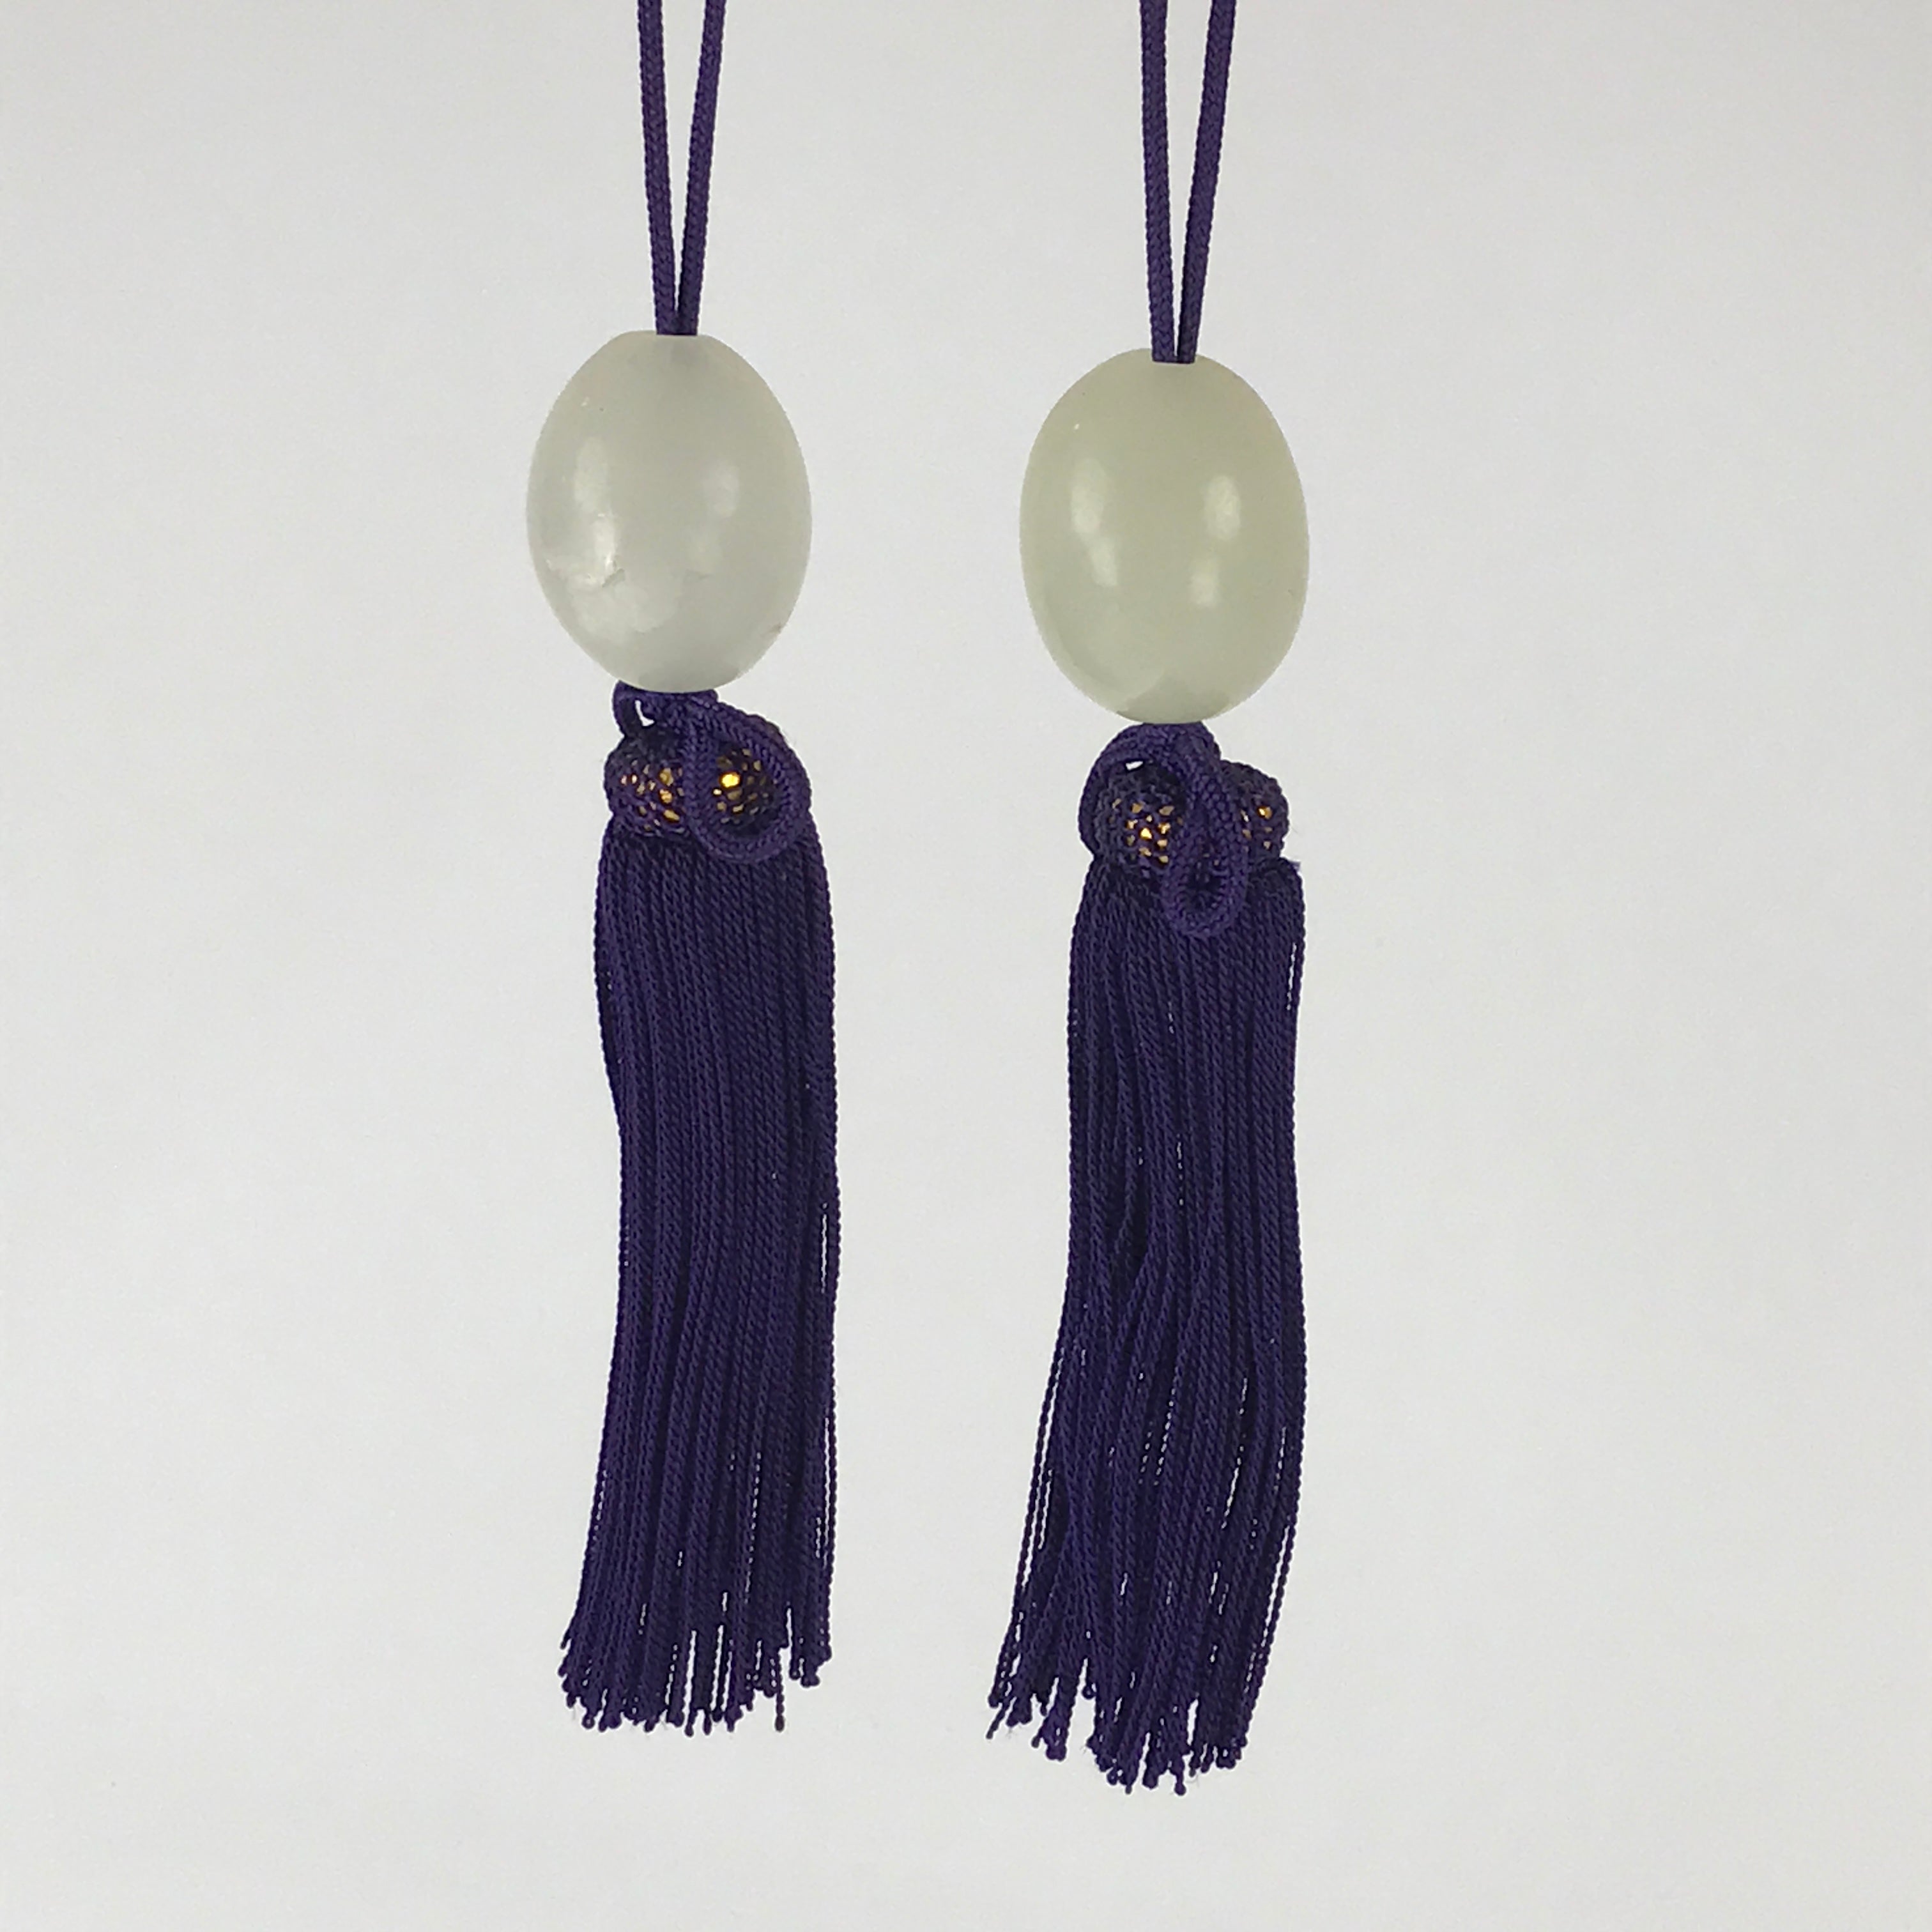 Japanese Hanging Scroll Weights Vtg Fuchin Marble Stone Purple Tassel FC304